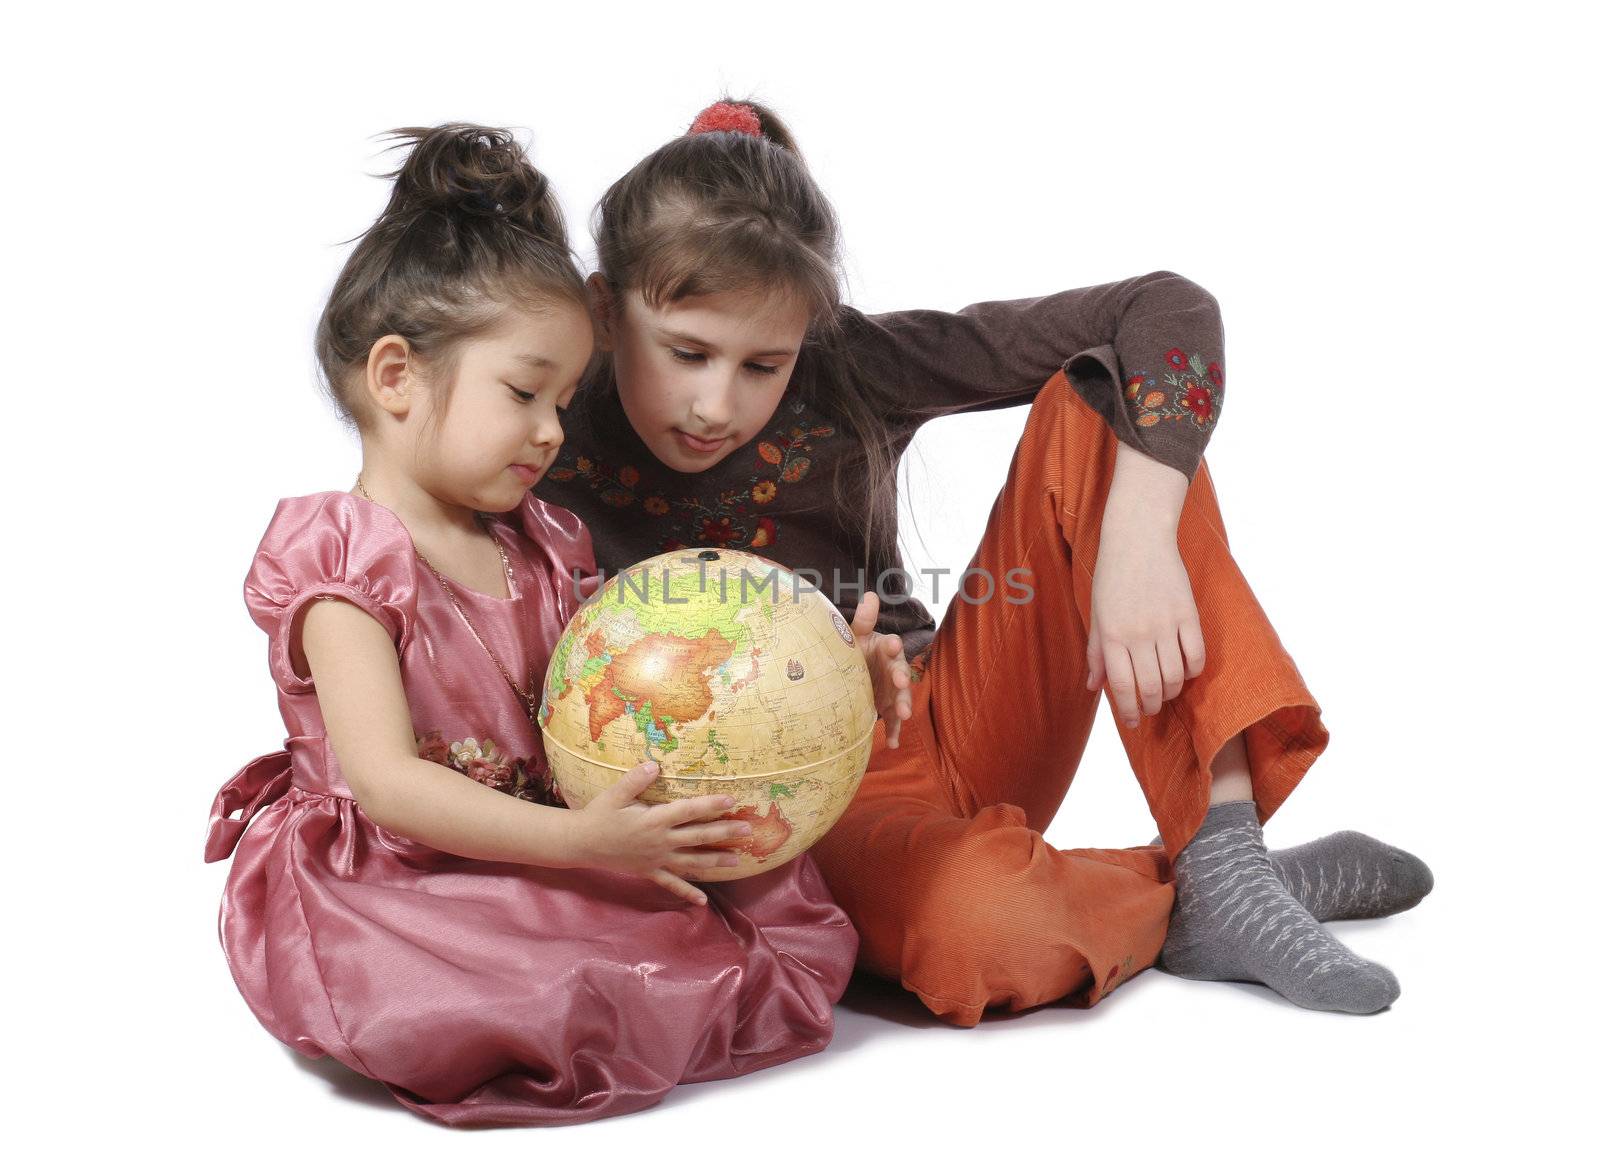 Two girls consider globe on white background